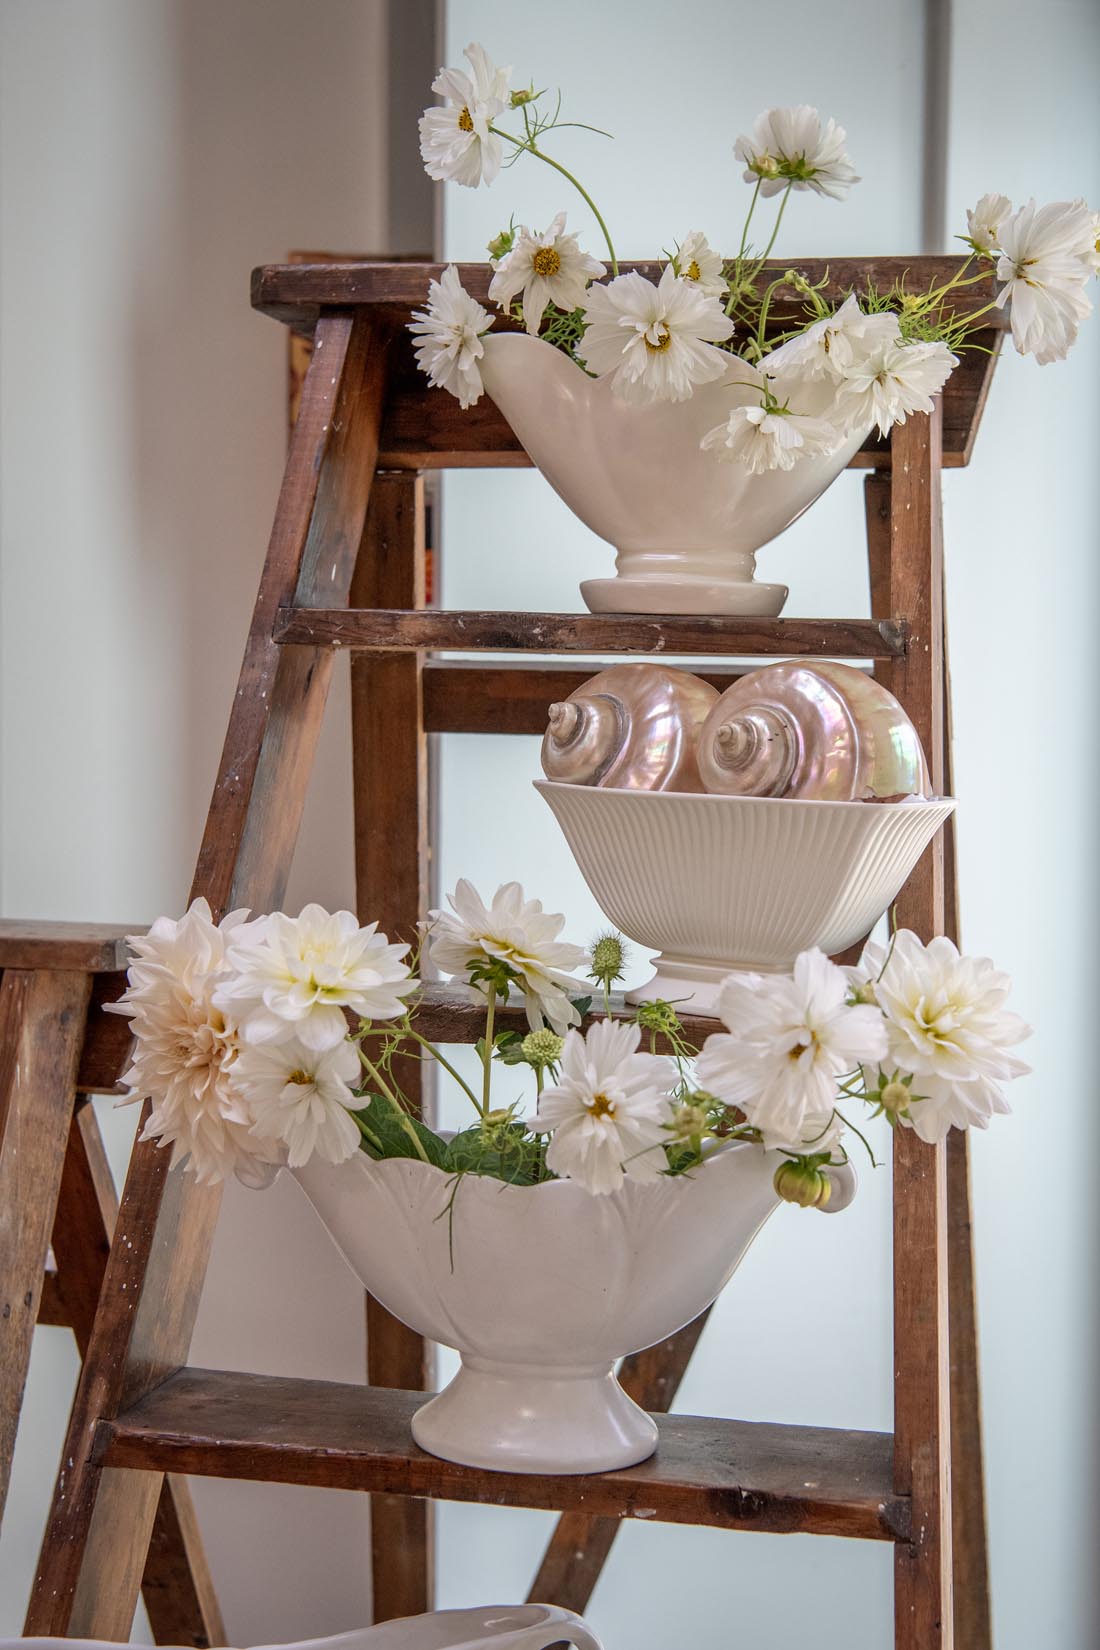 Vintage Fulham Pottery Constance Spry white lotus mantle vase - Natalia Willmott